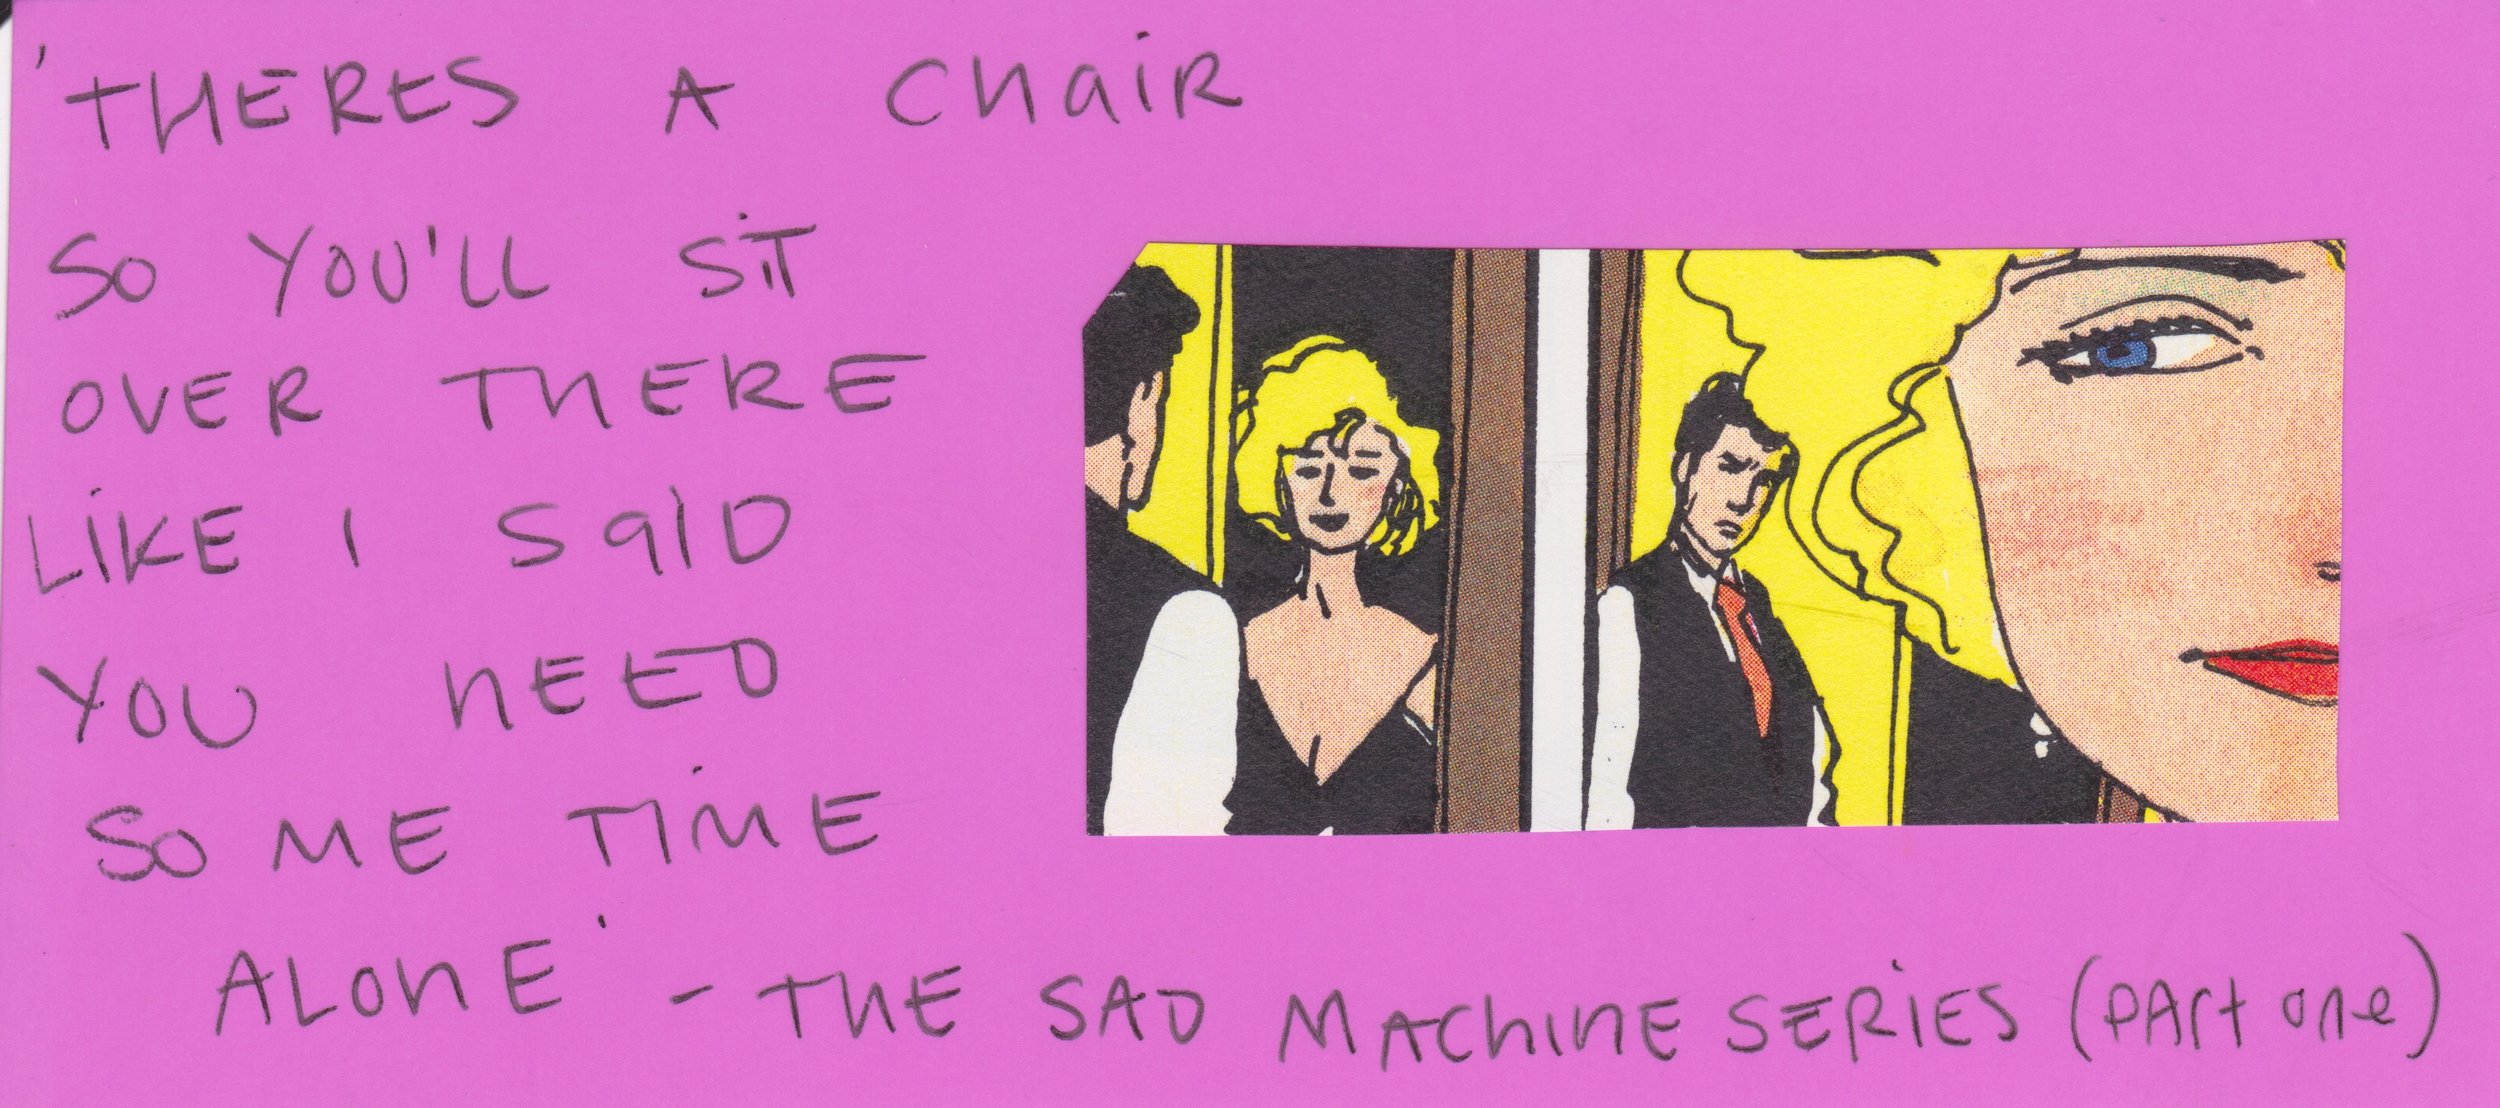 The Sad Machine Series Quotes 21.jpeg